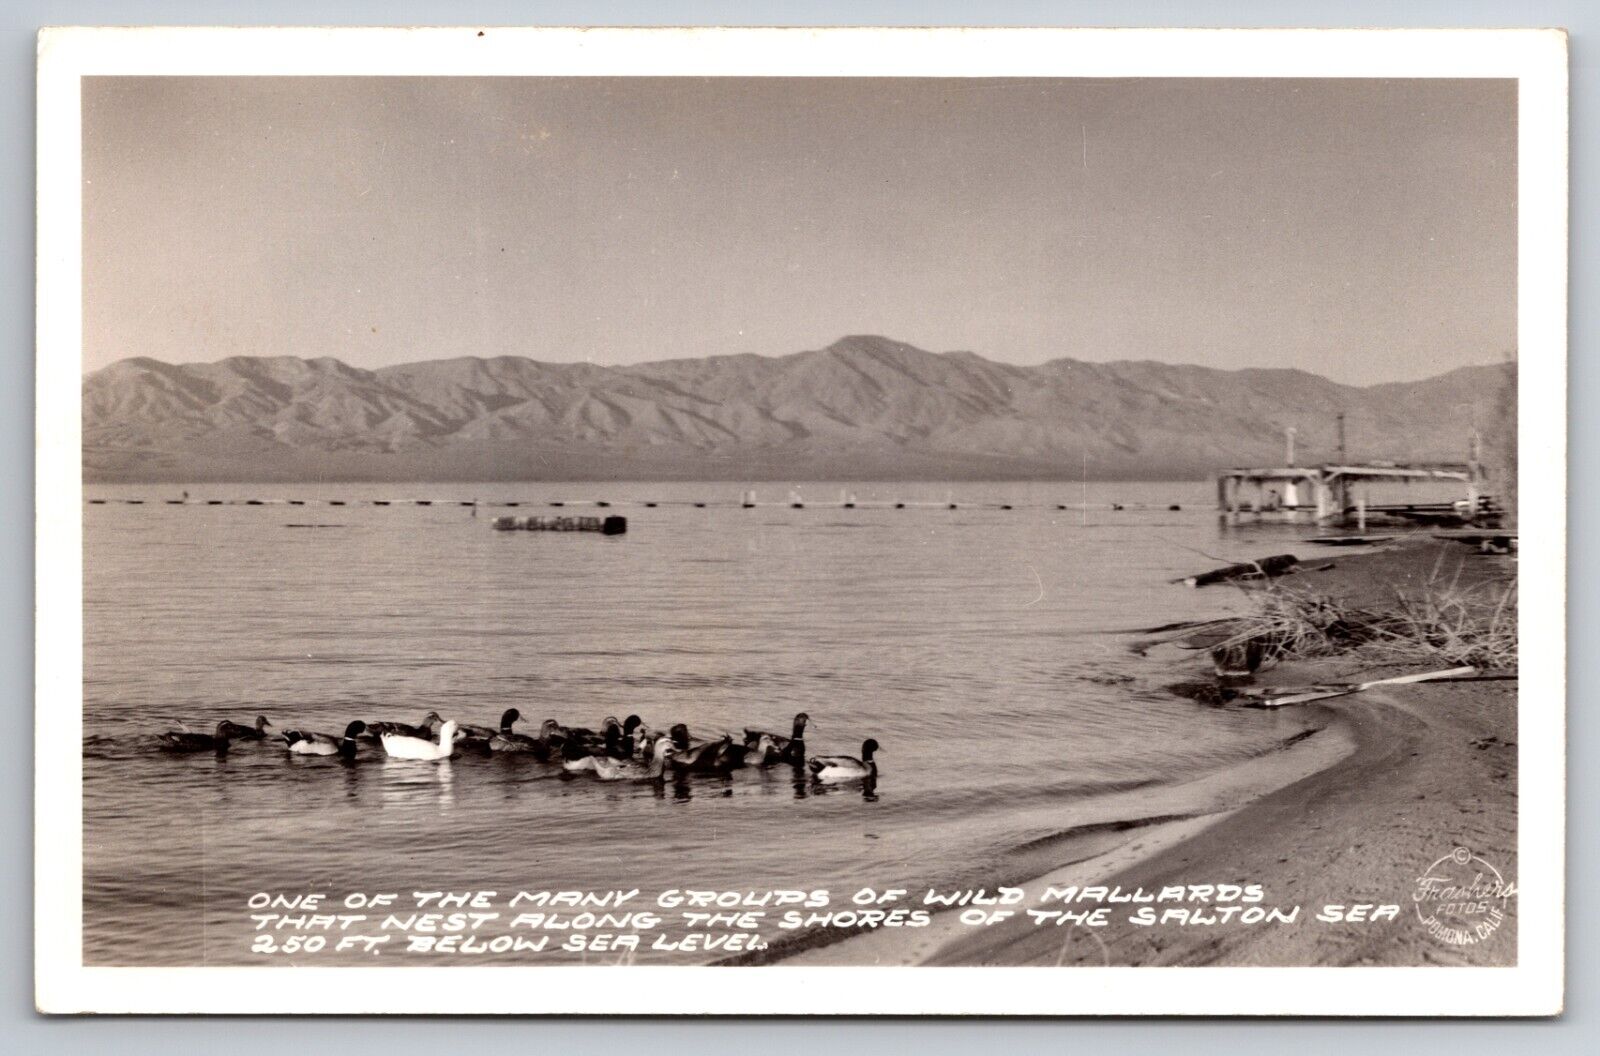 Wild Mallards Salton Sea California CA Frashers c1940 Real Photo RPPC